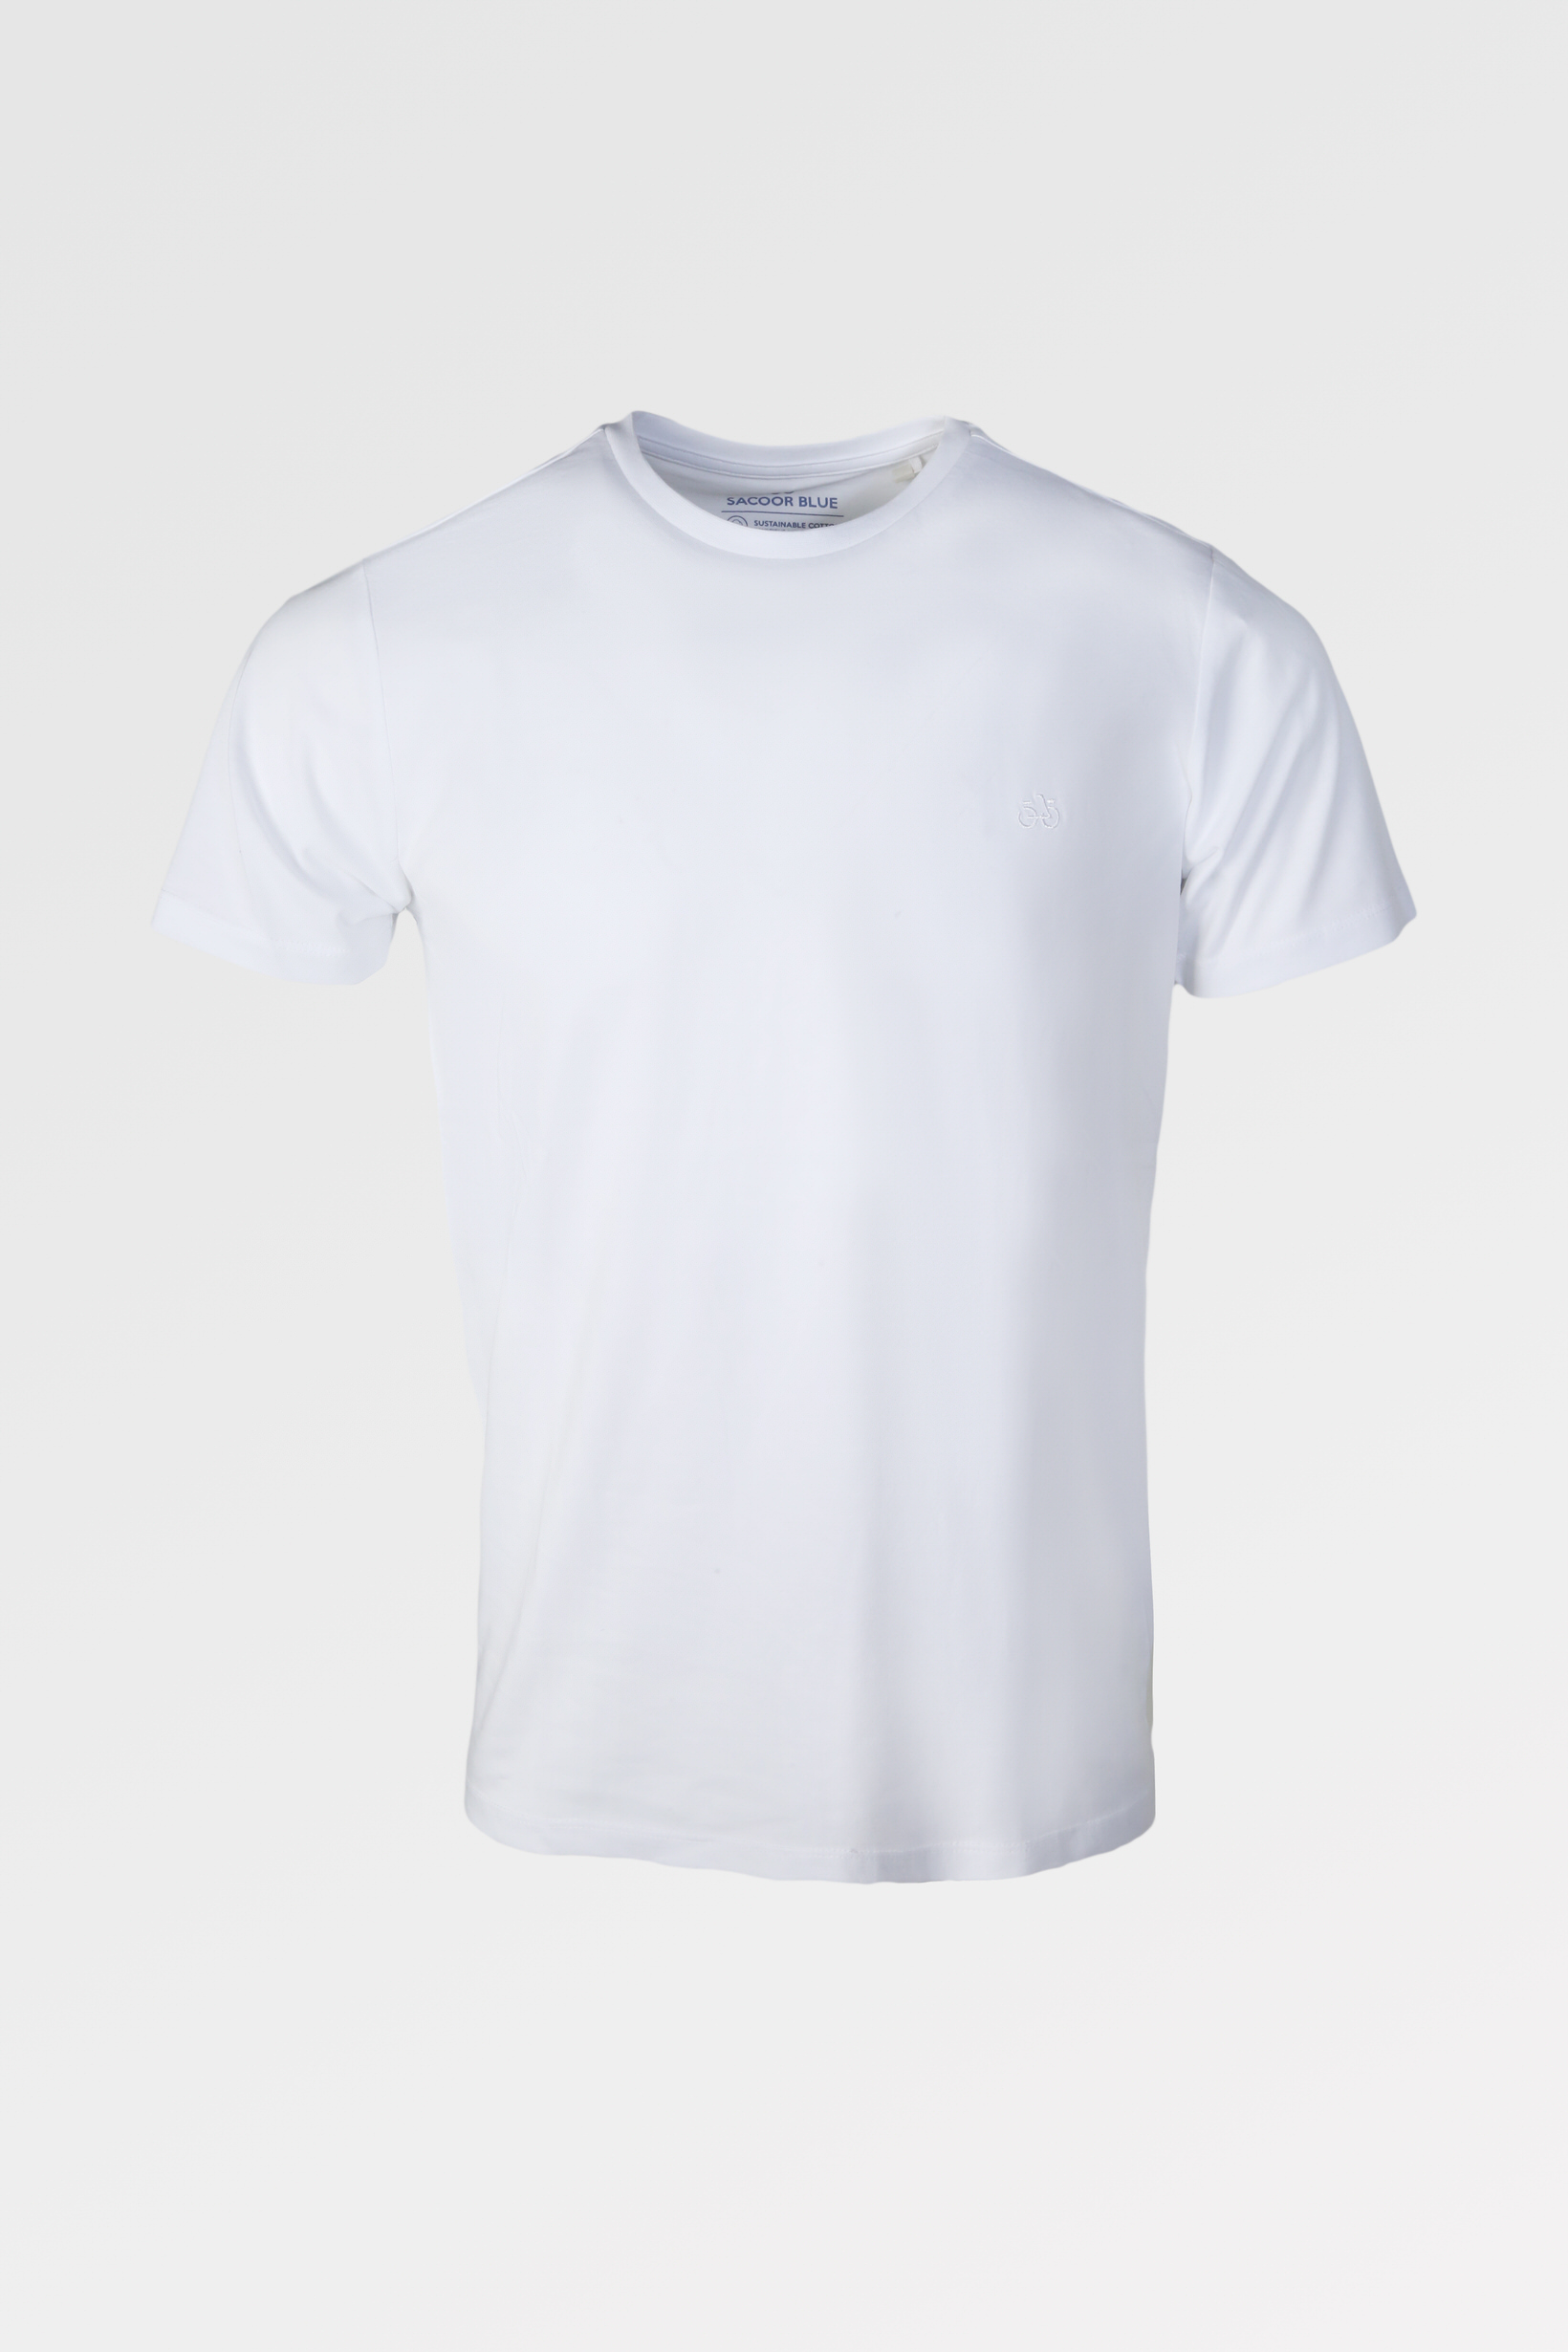 T-Shirt White Casual Man